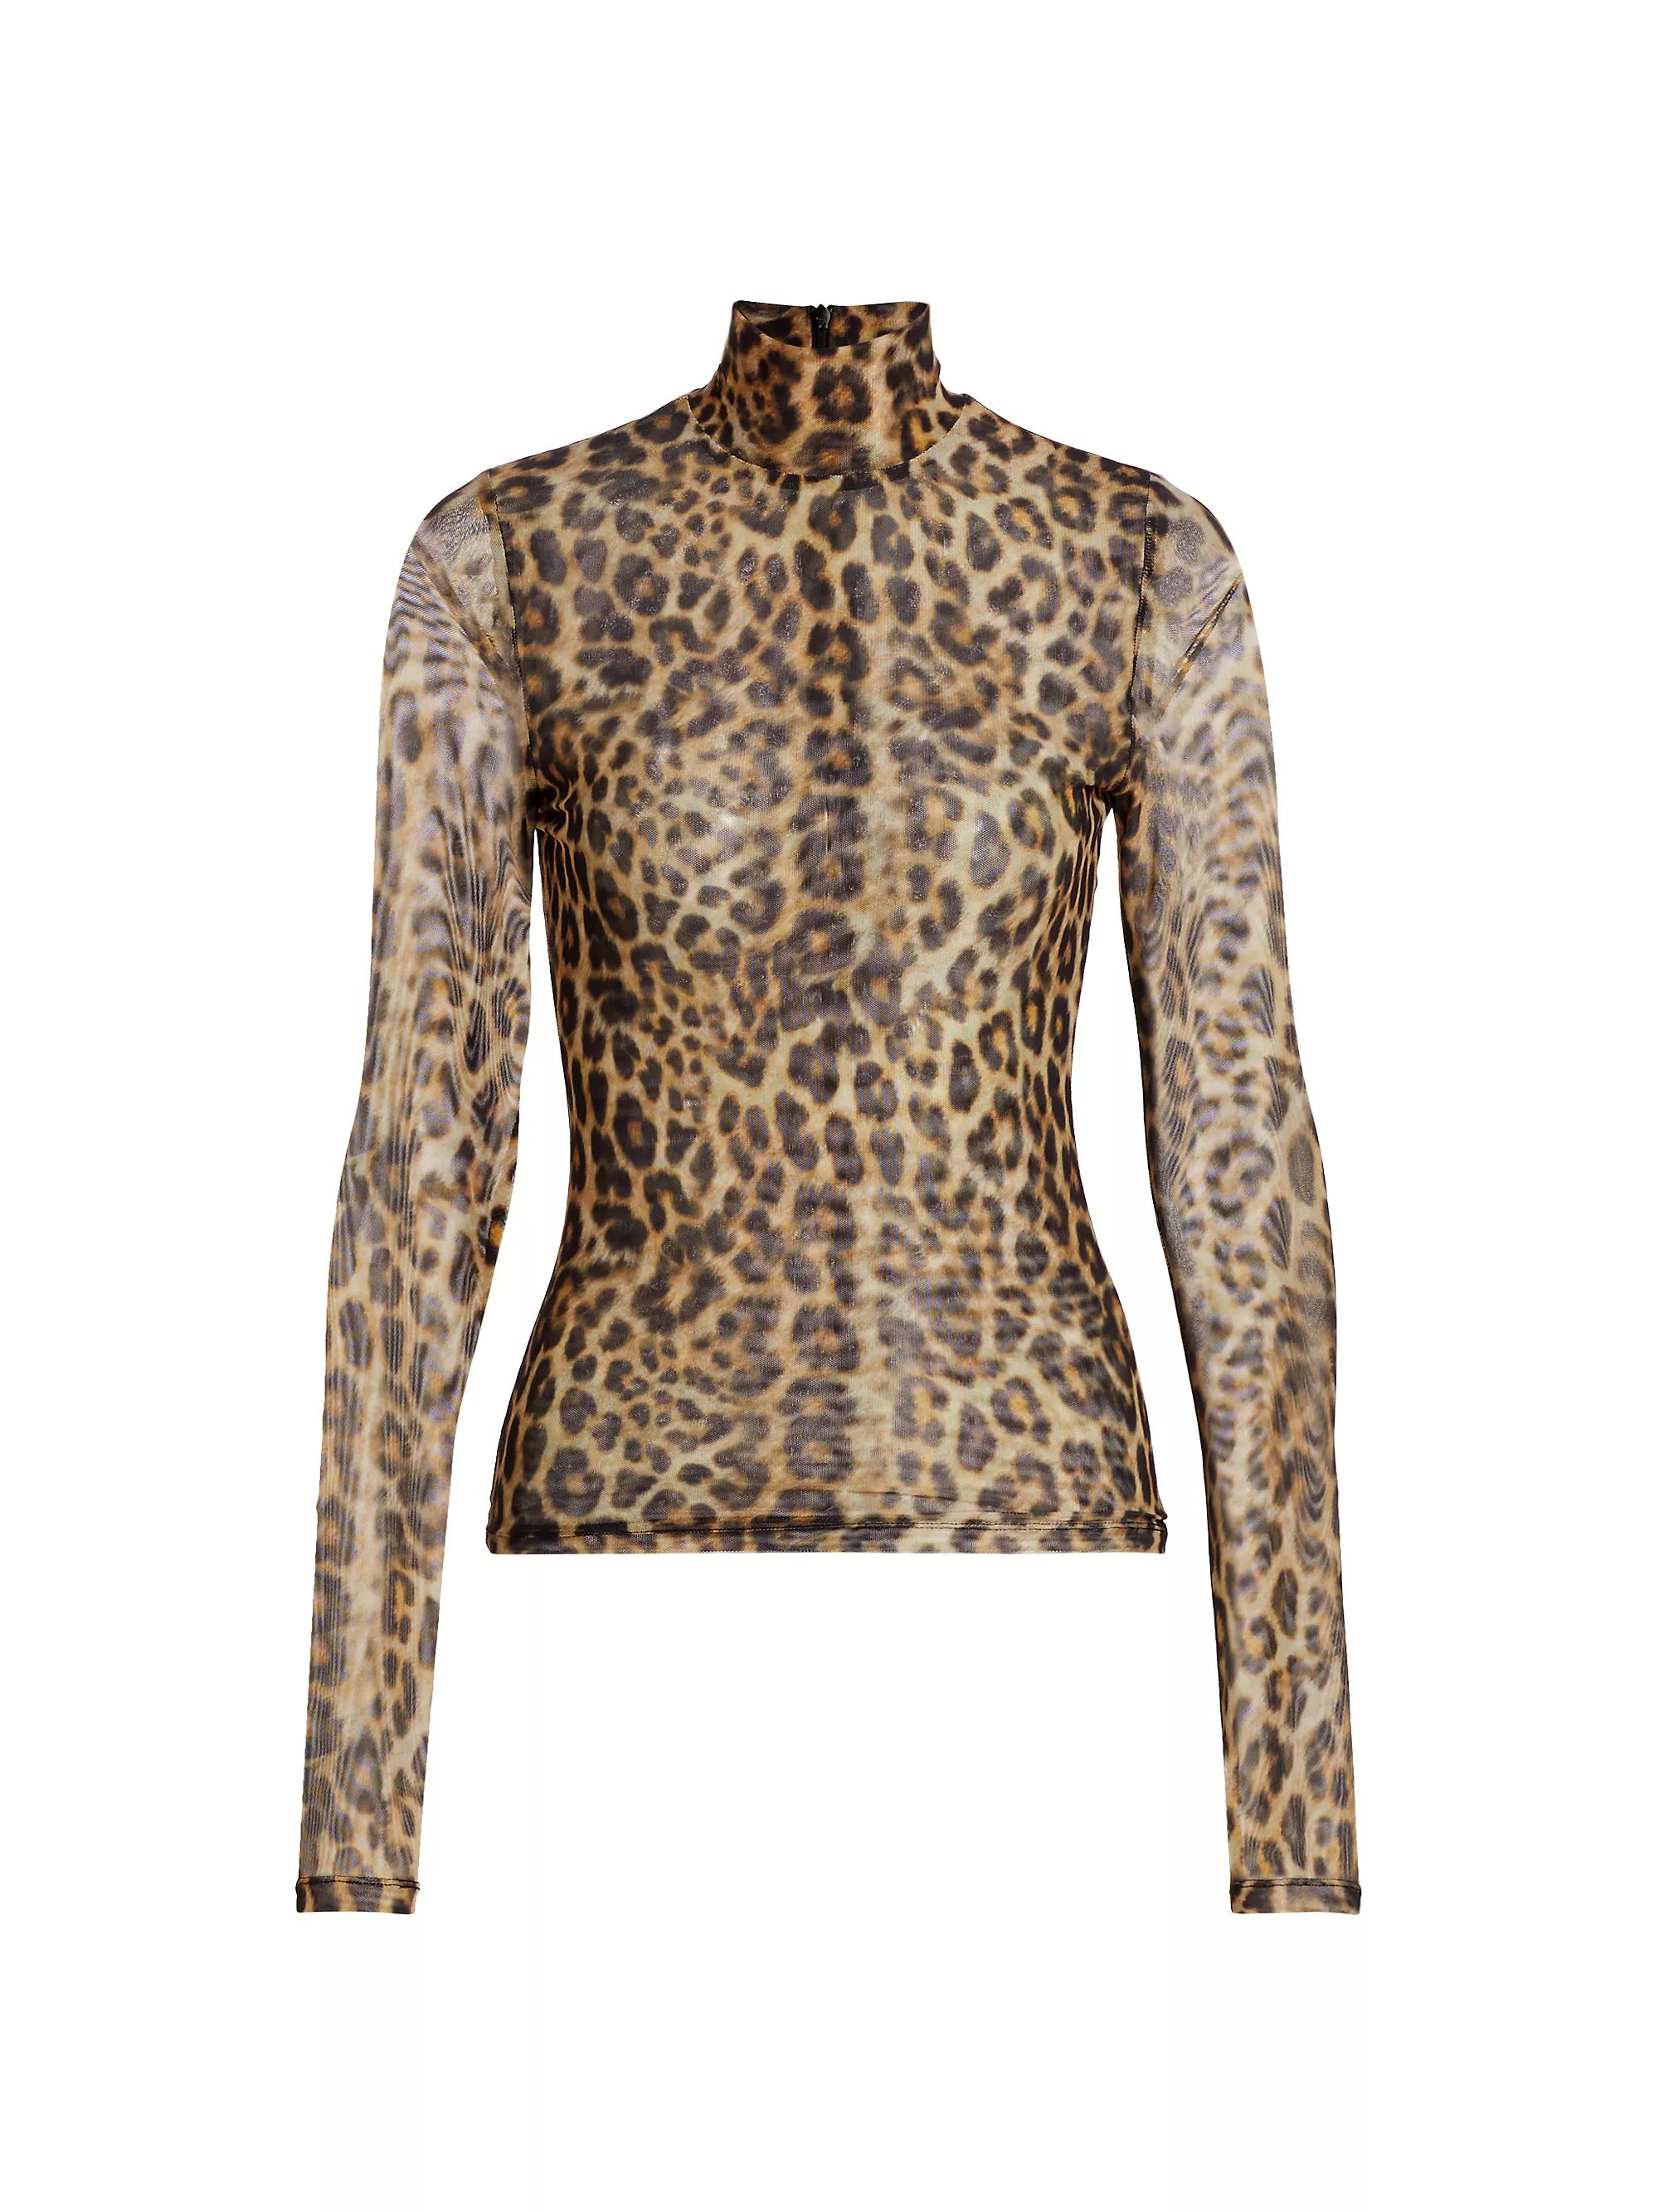 Lorden Leopard Mesh Top | Saks Fifth Avenue